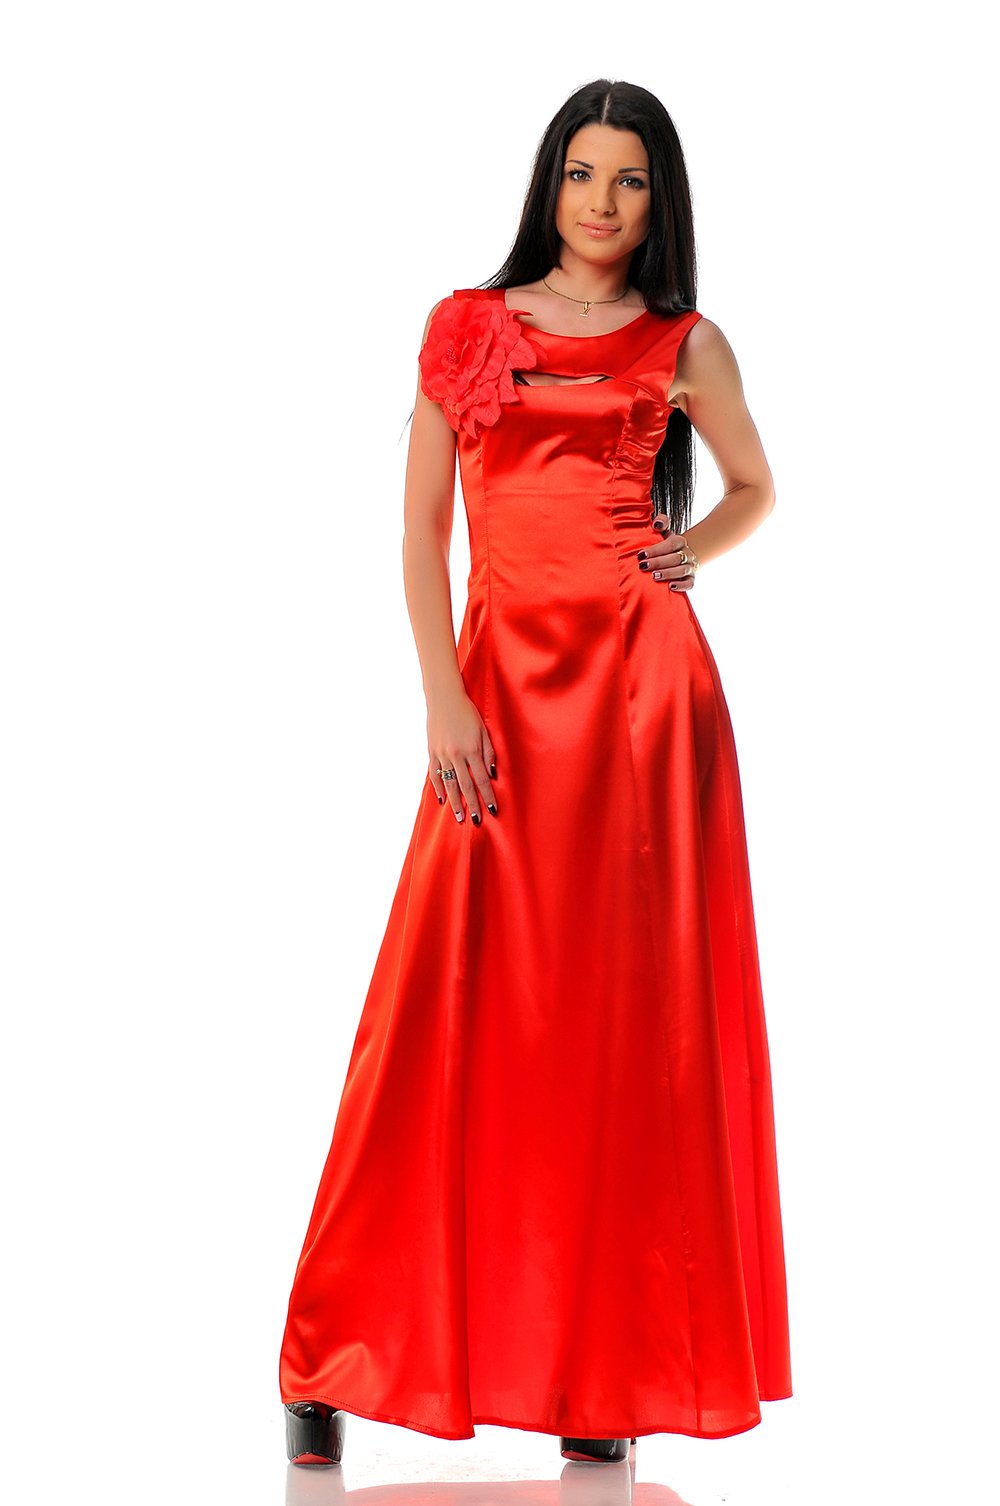 Long red dress